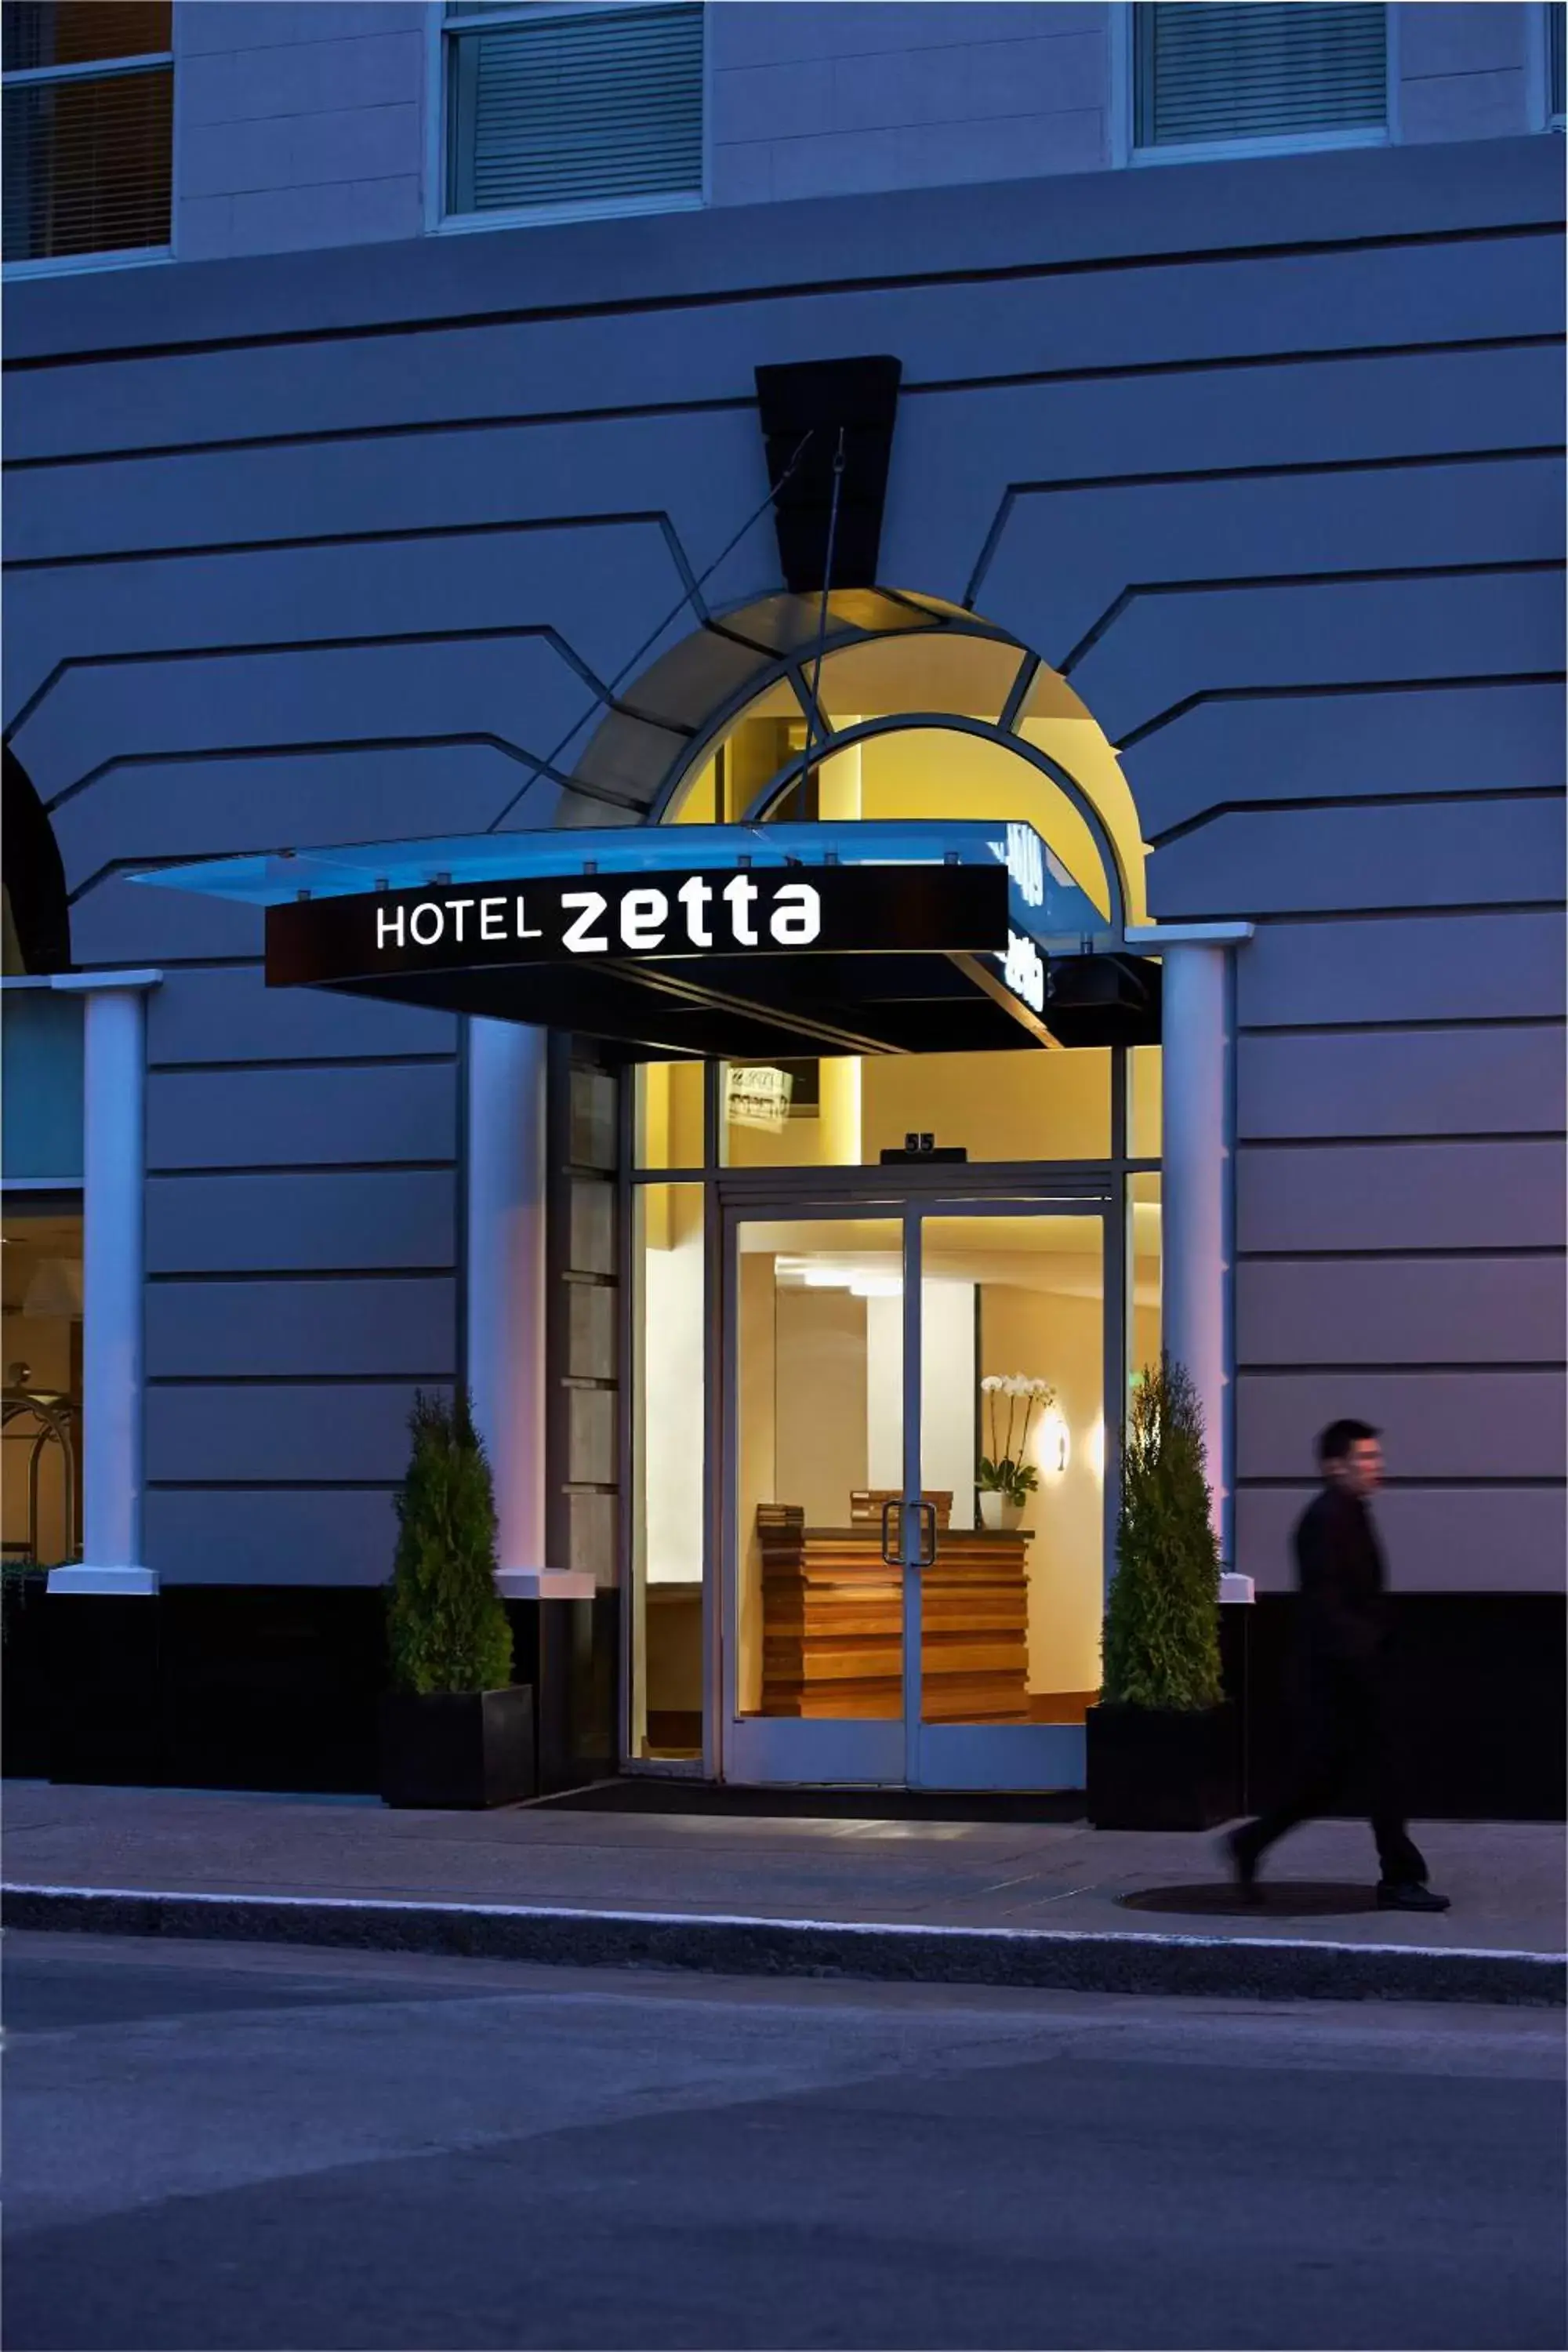 Property building in Hotel Zetta San Francisco